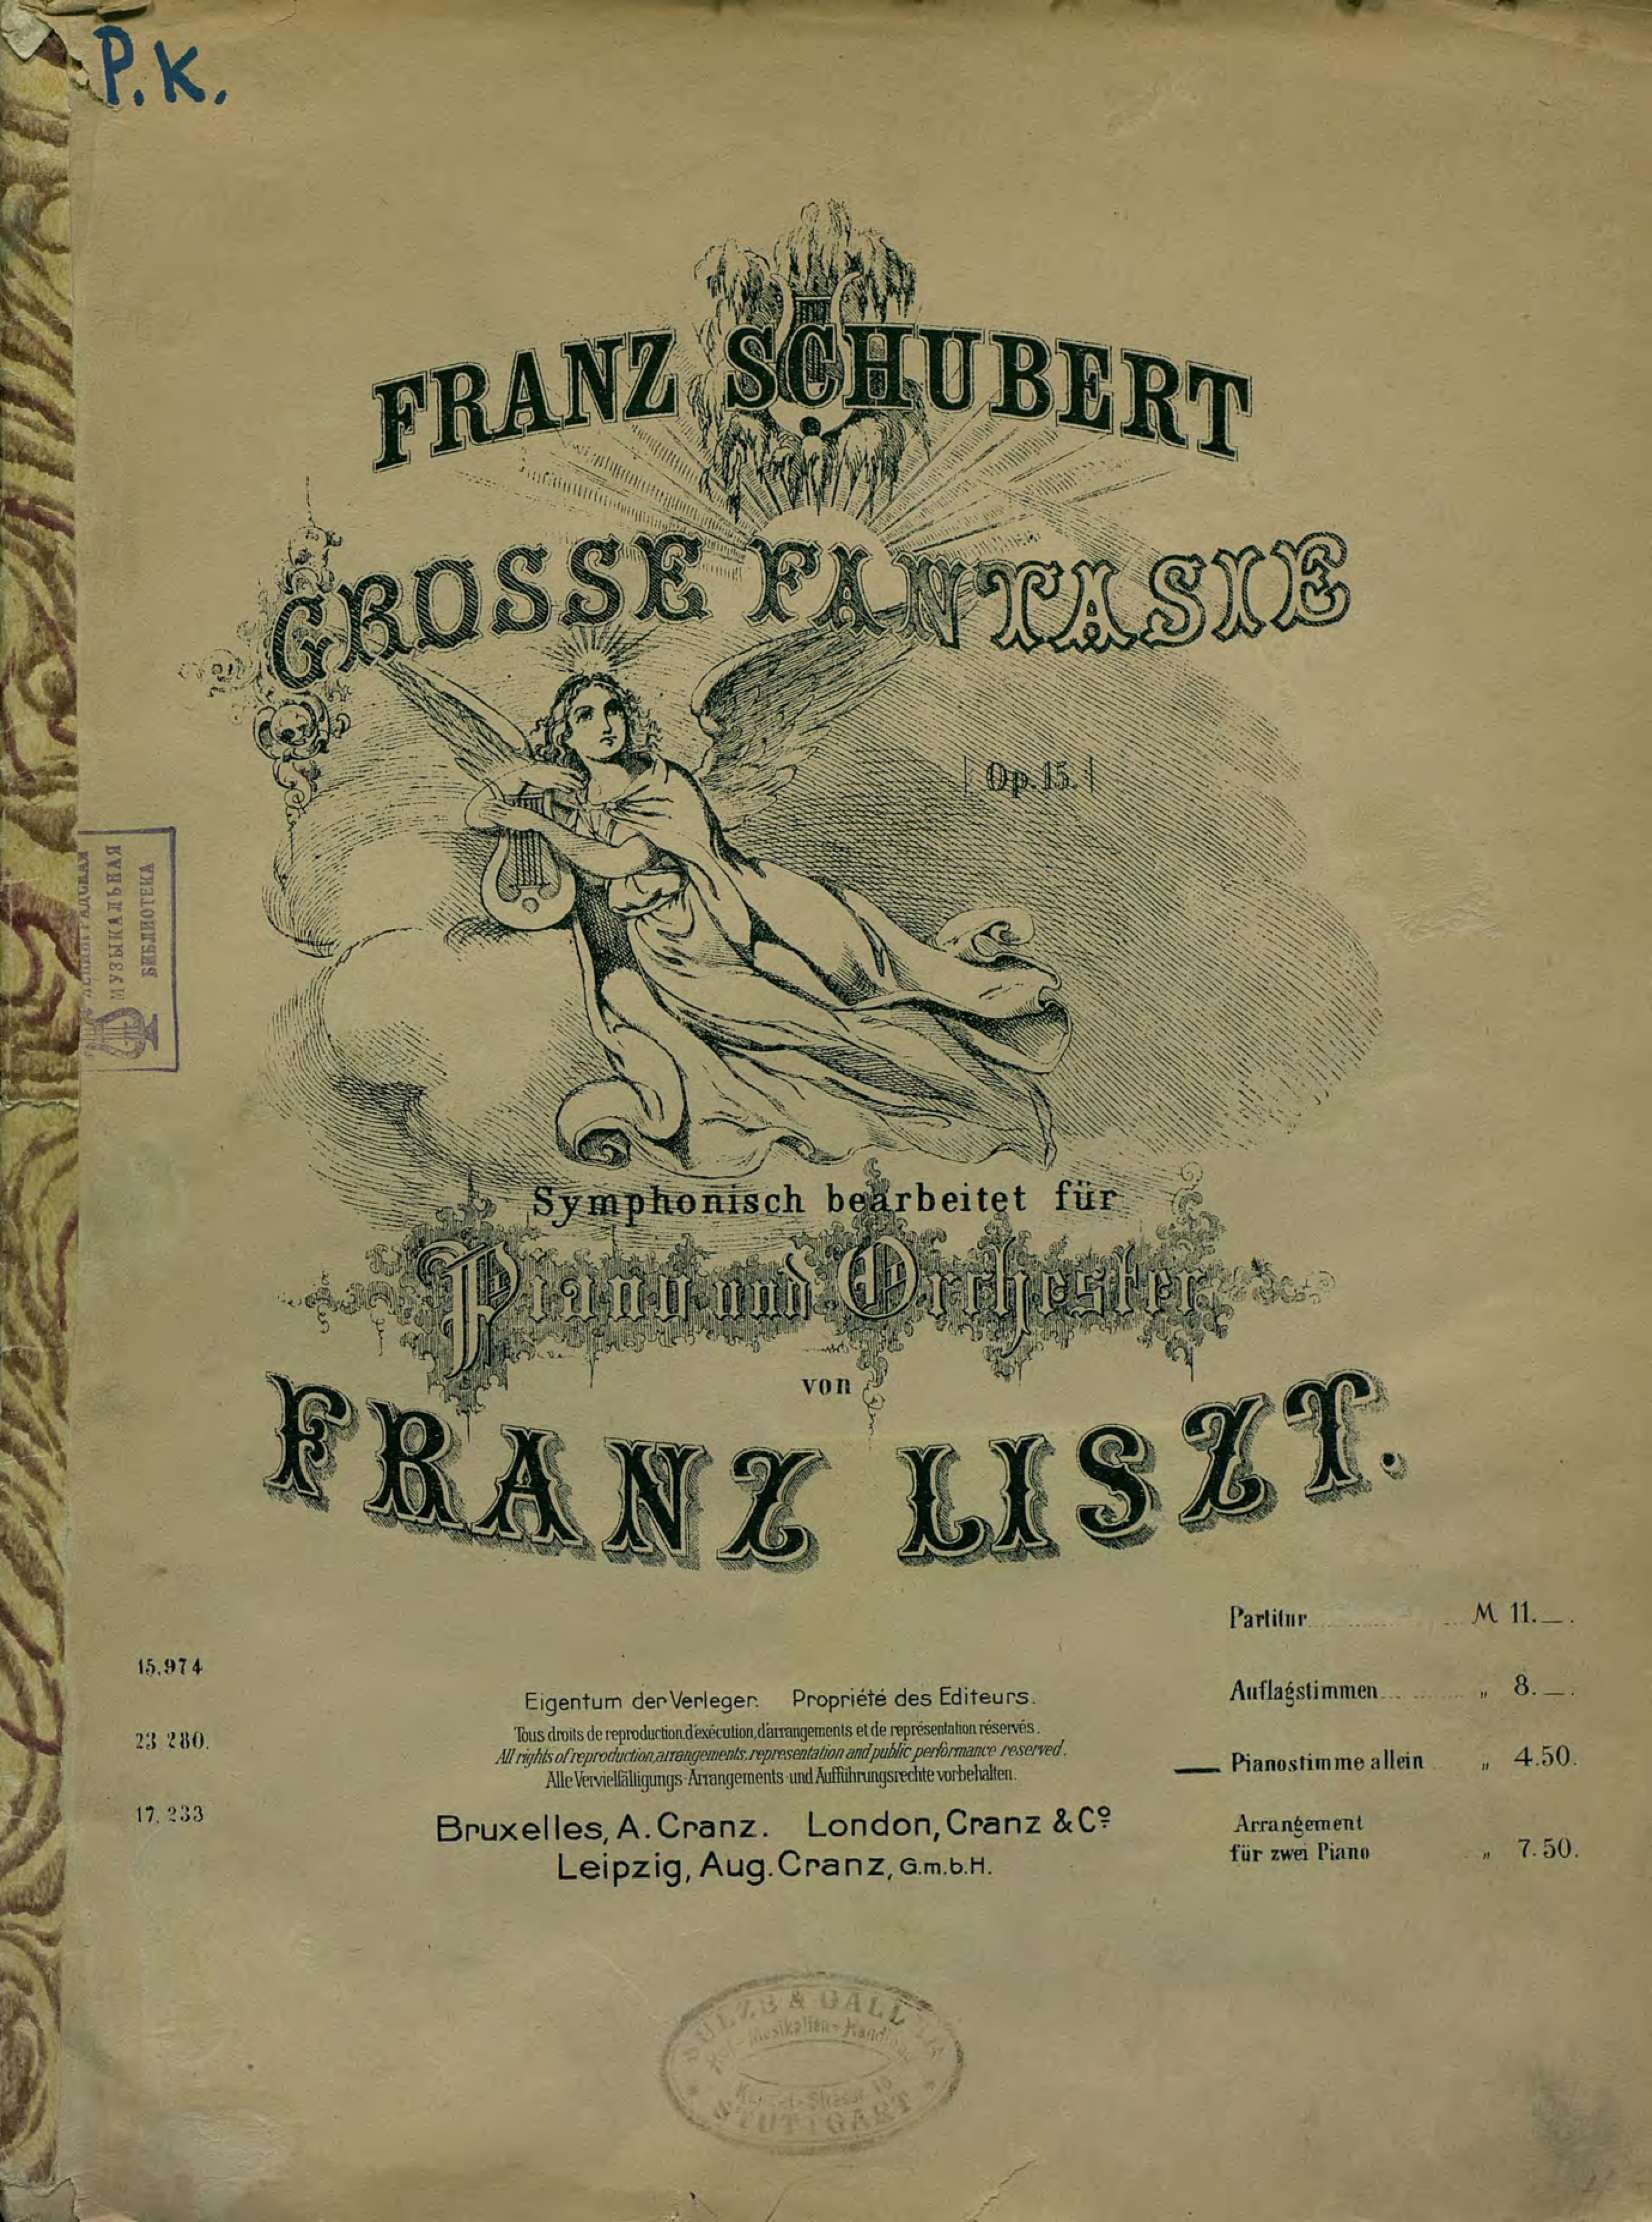 Франц Петер Шуберт Grosse Fantasie, op. 15, fur Piano und Orchester v. F. Liszt simphonisch bearb. Pianostimme allein